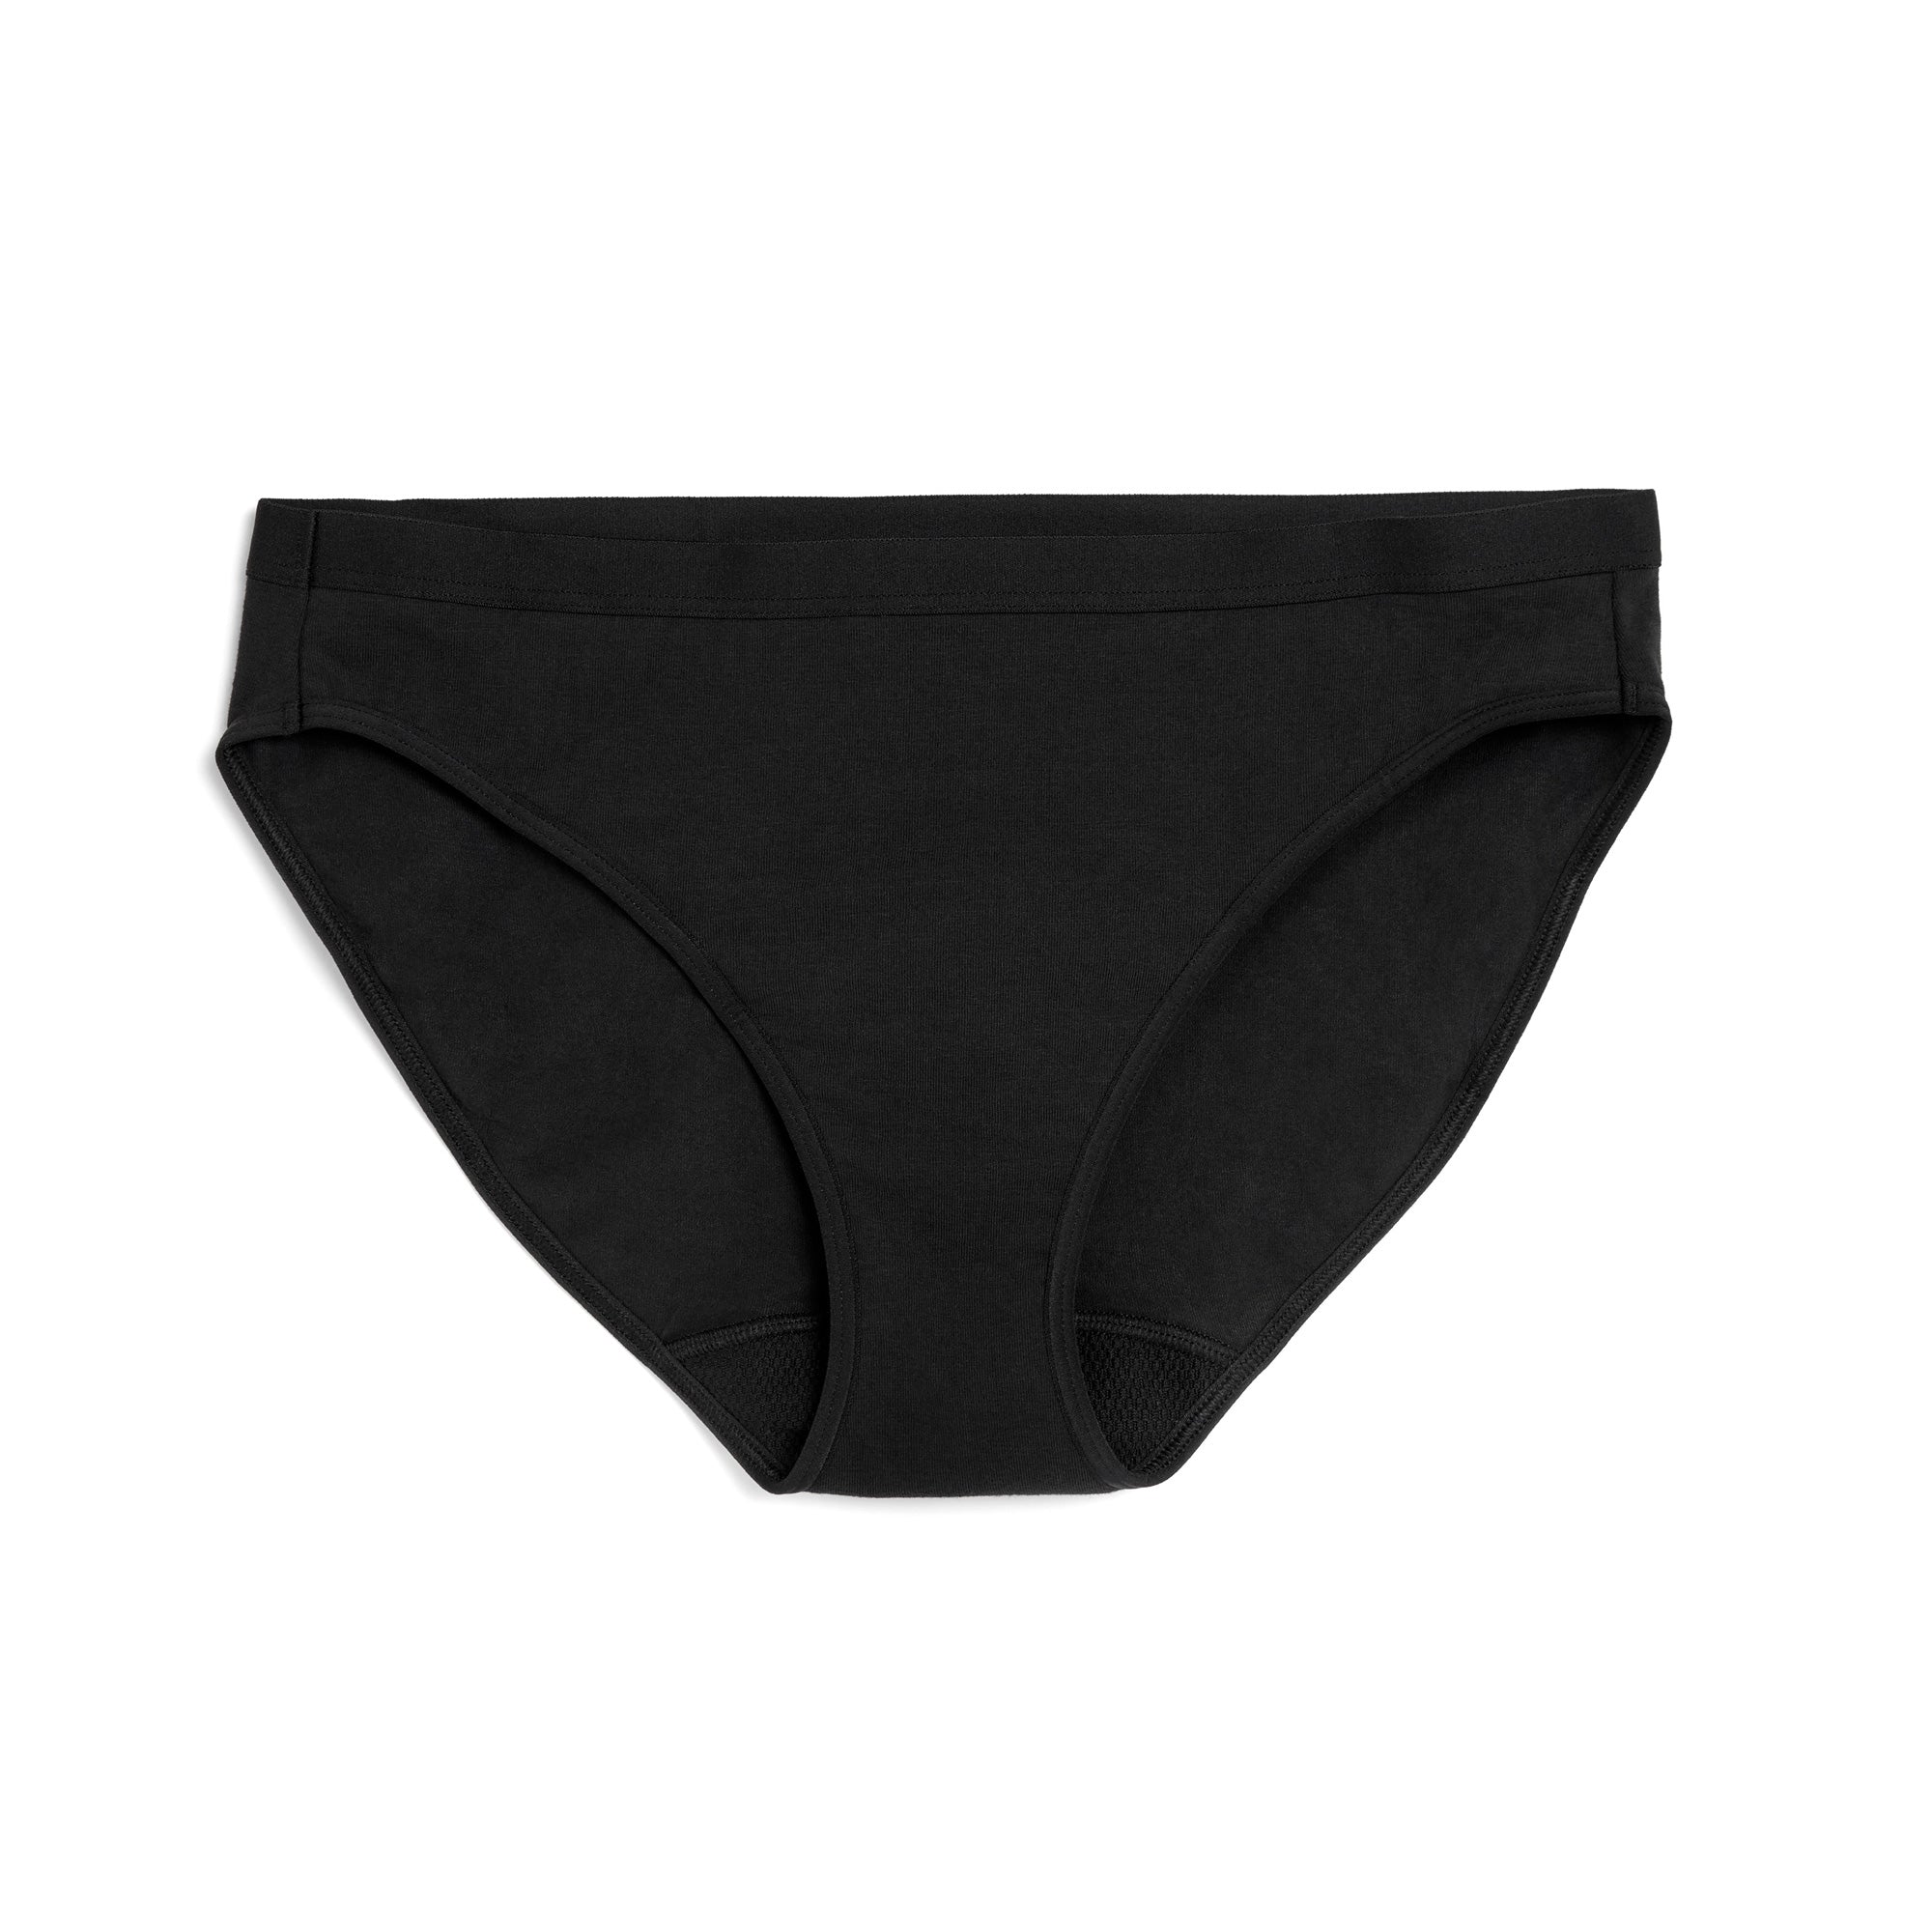 Mordlanka Period Underwear for Women Breathable Menstrual Period Panties